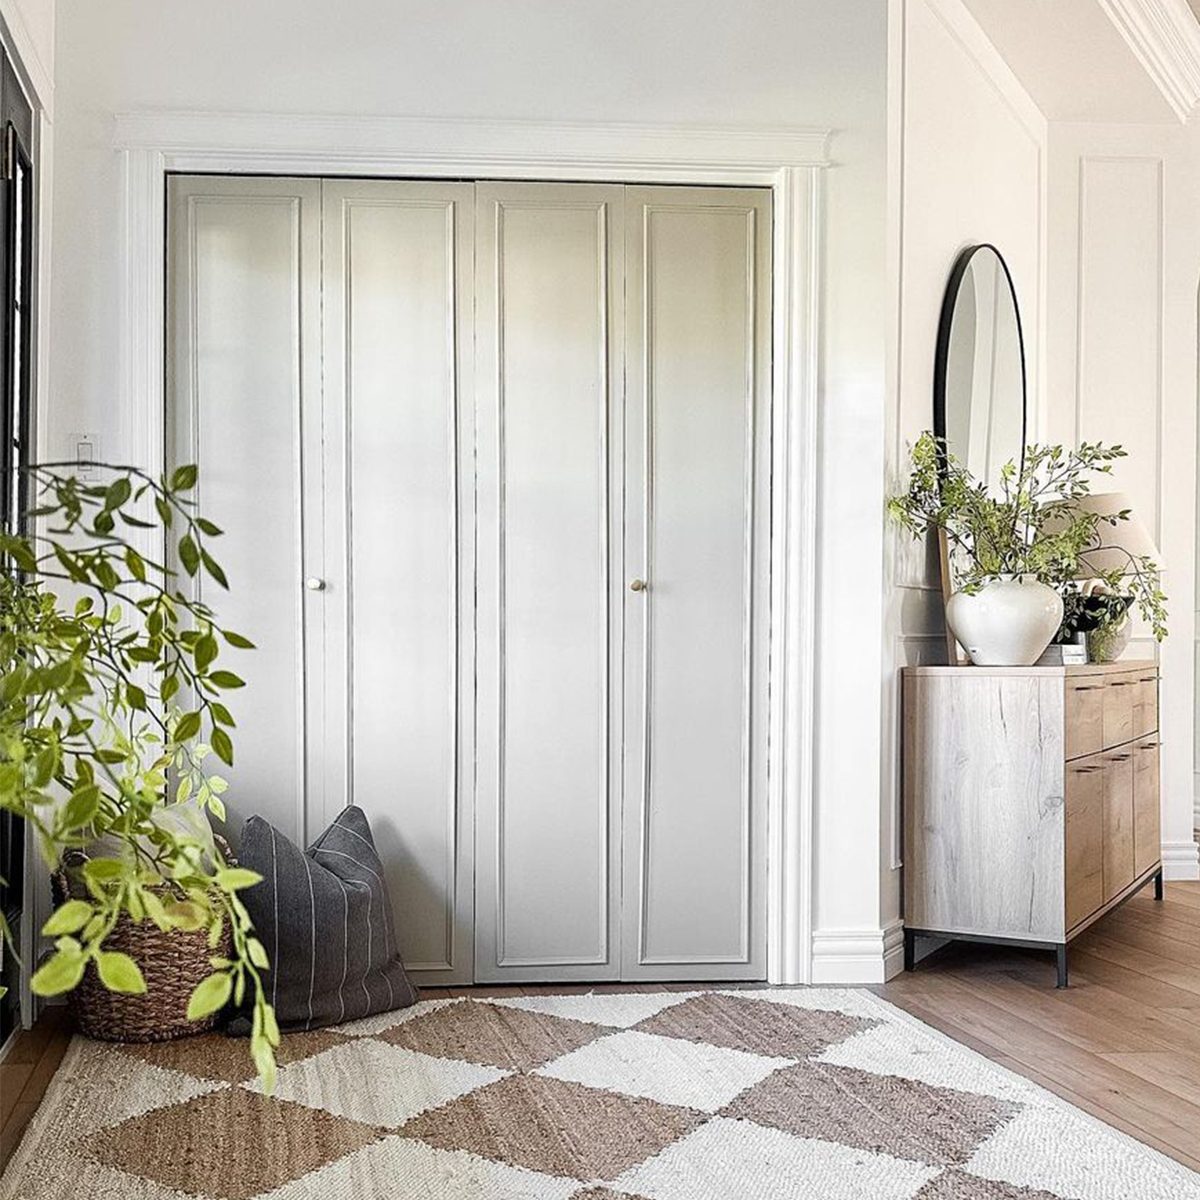 10 DIY Closet Door Ideas to Enhance Your Home